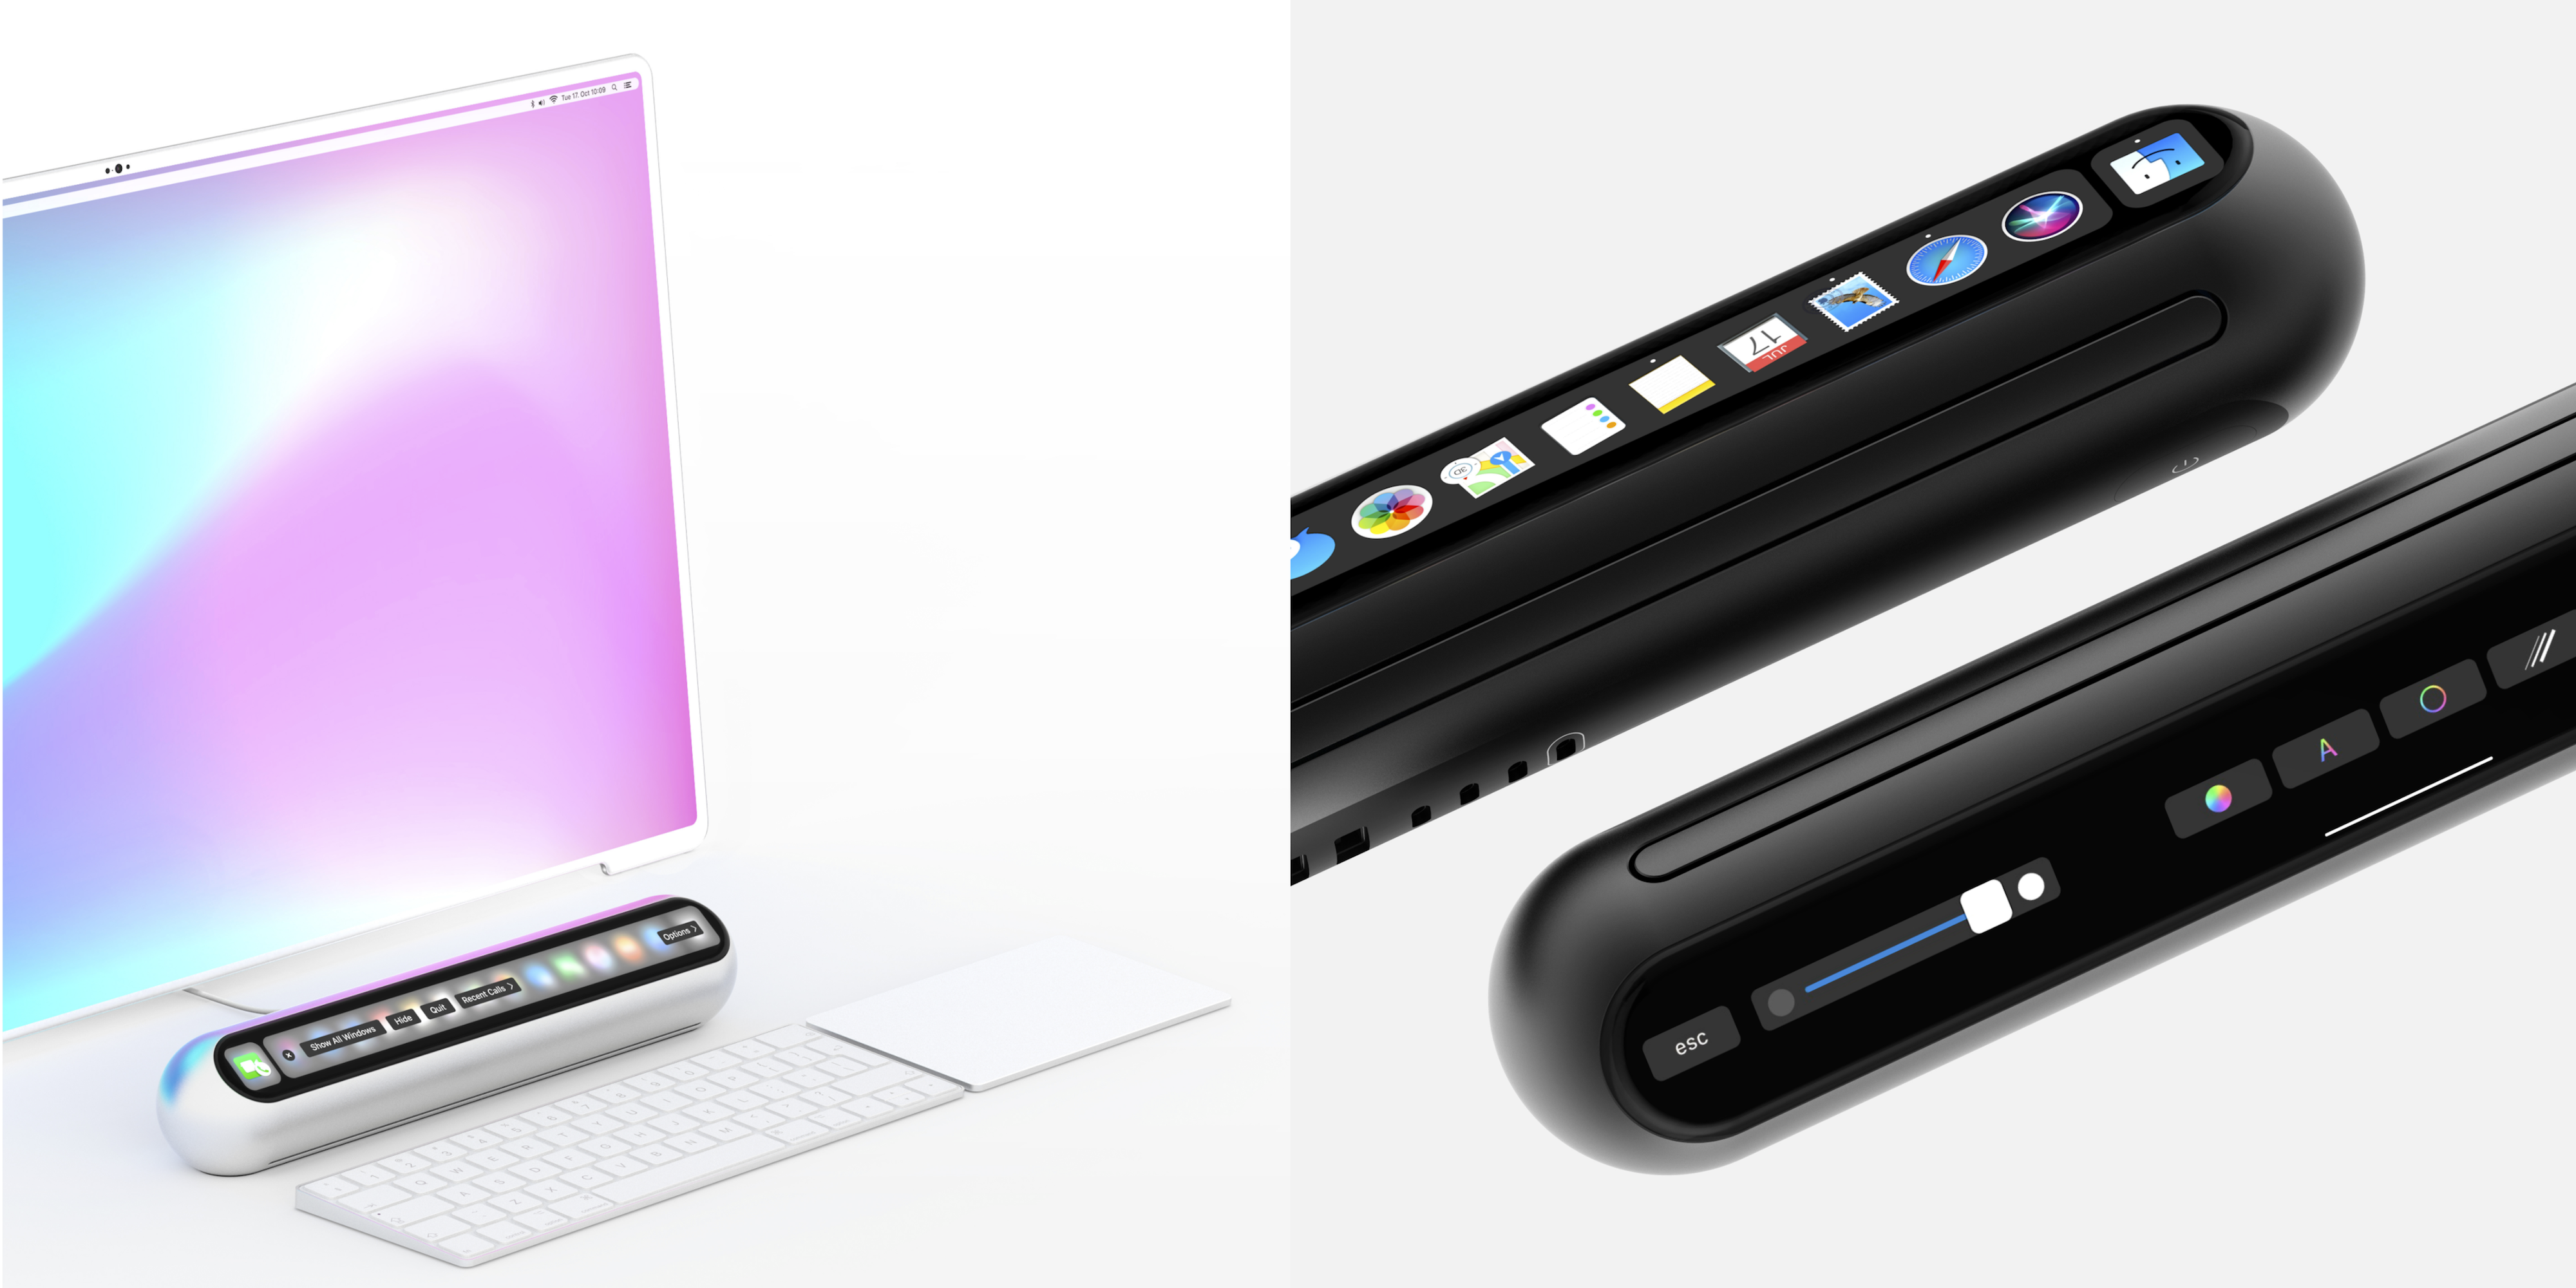 Mac Mini + iPad Mini = touchscreen Mac